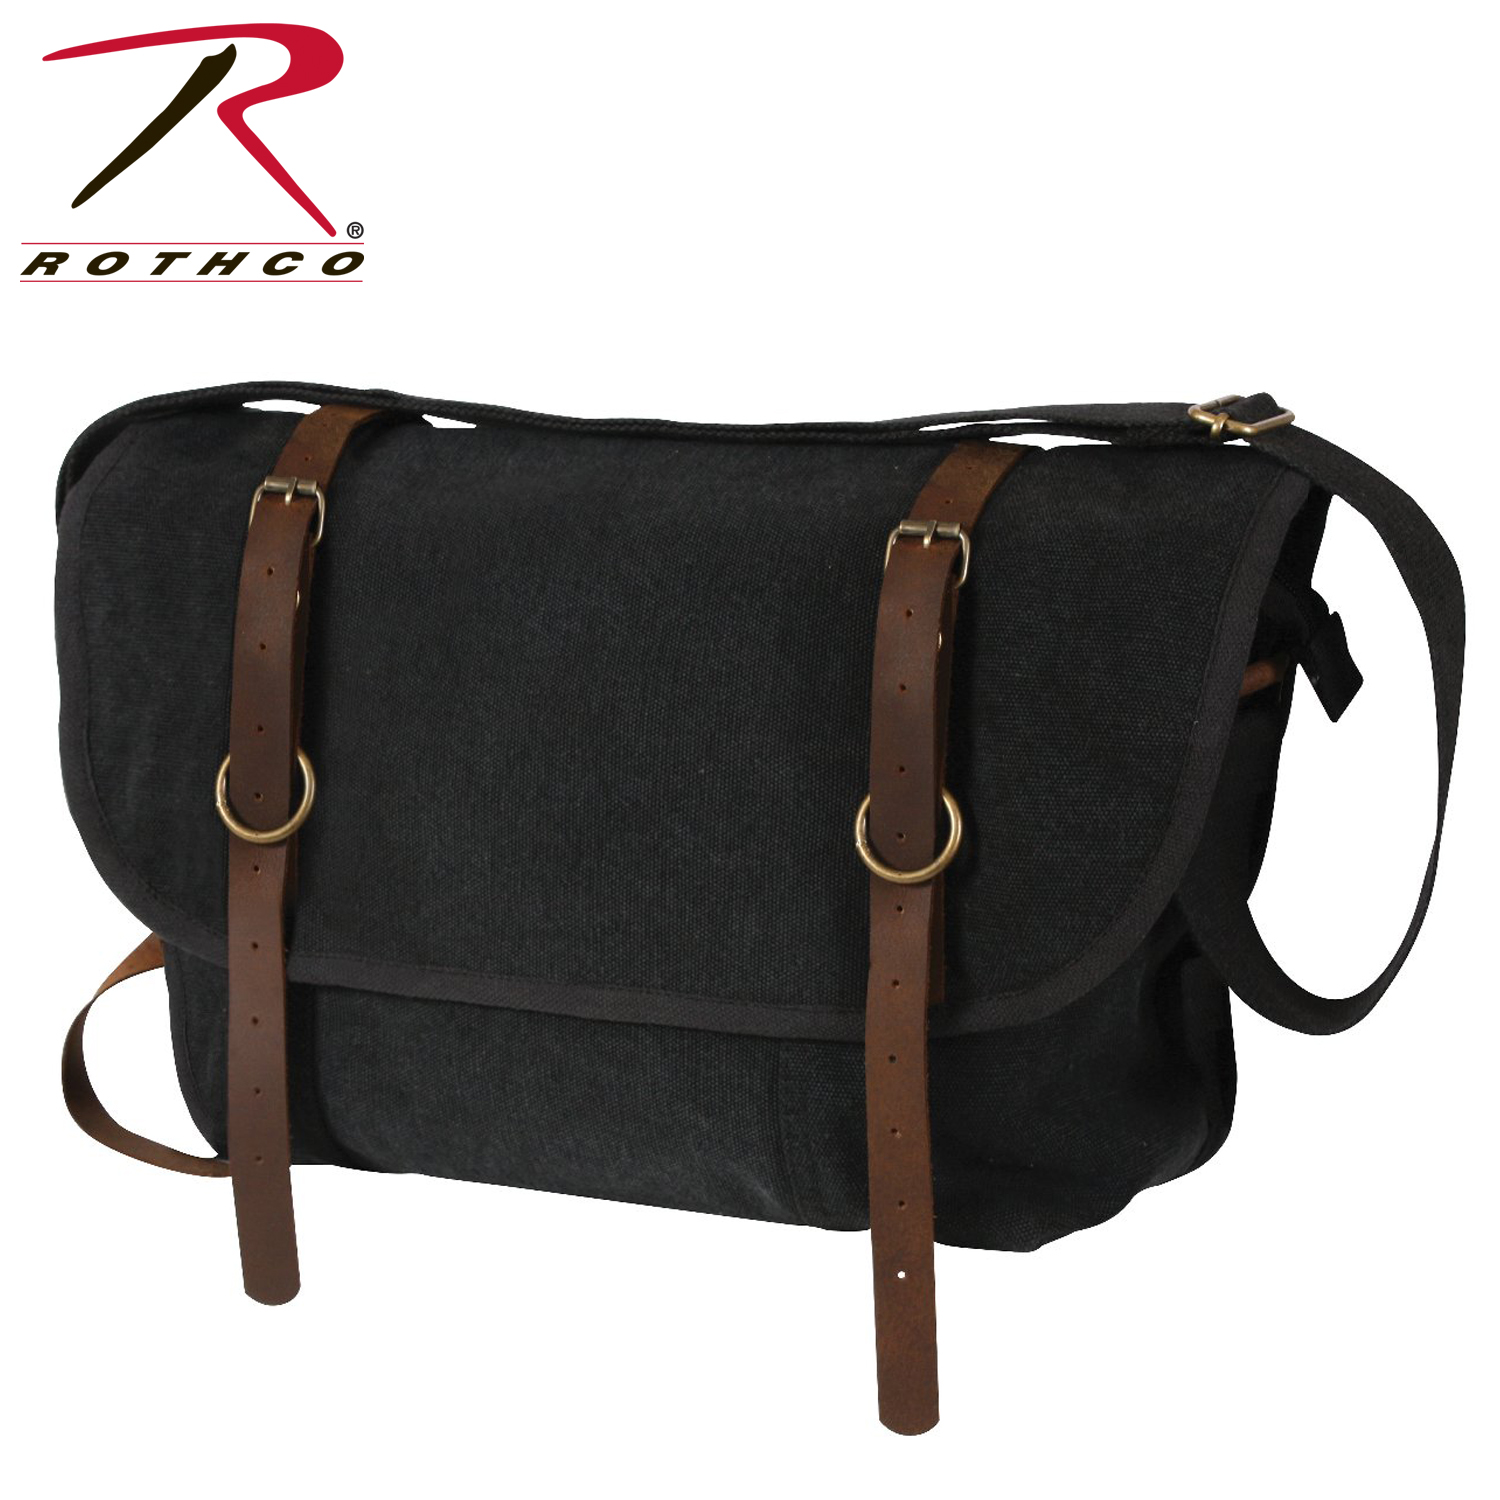 Rothco Vintage Canvas Explorer Shoulder Bag w/ Leather Accents